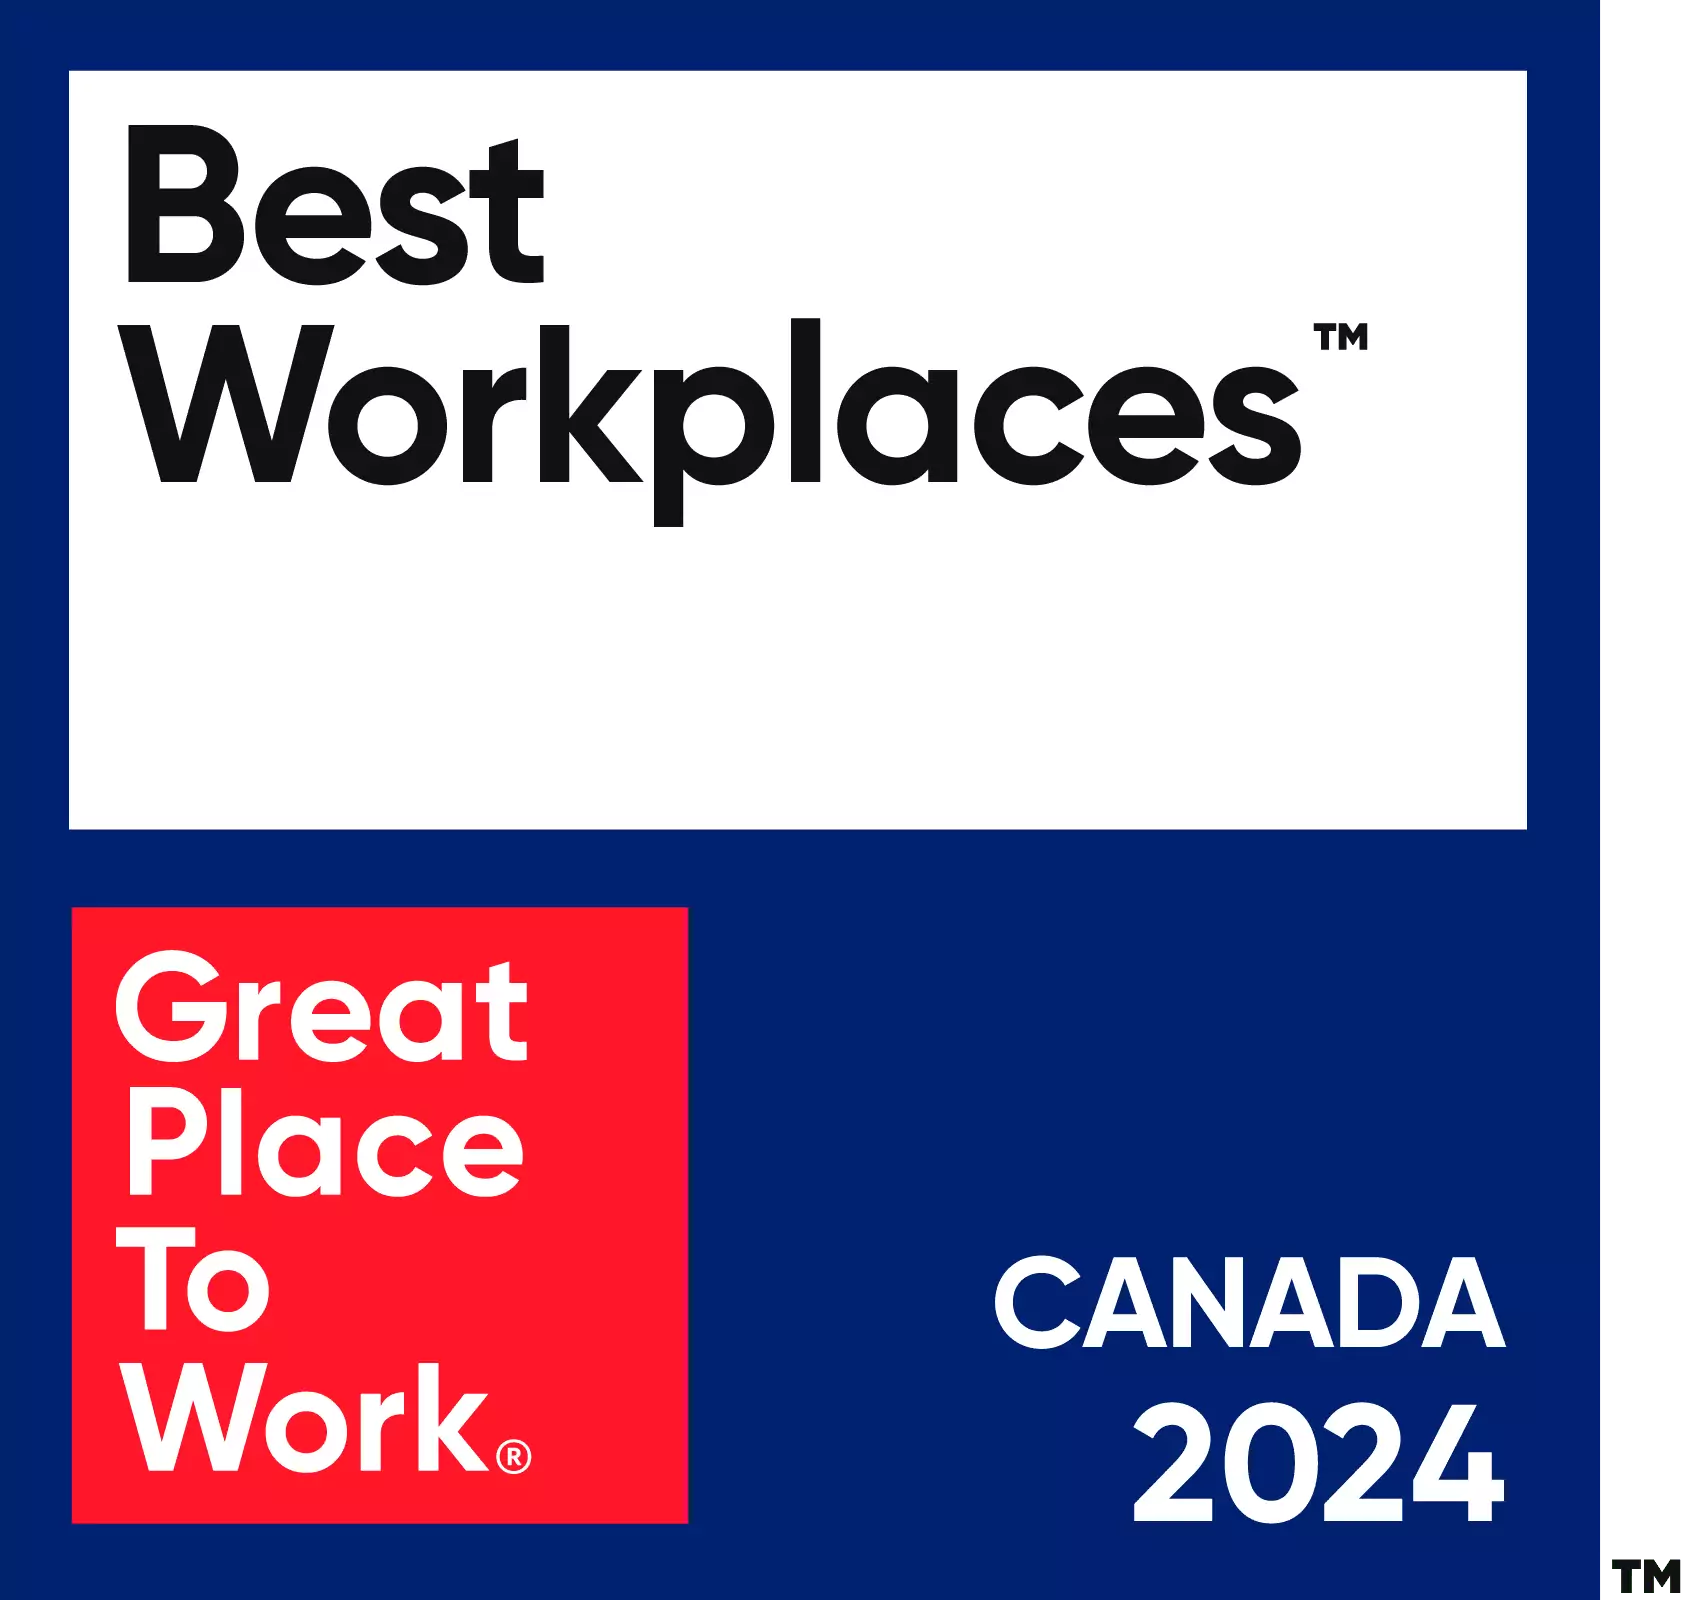 Best Workplace in Canada